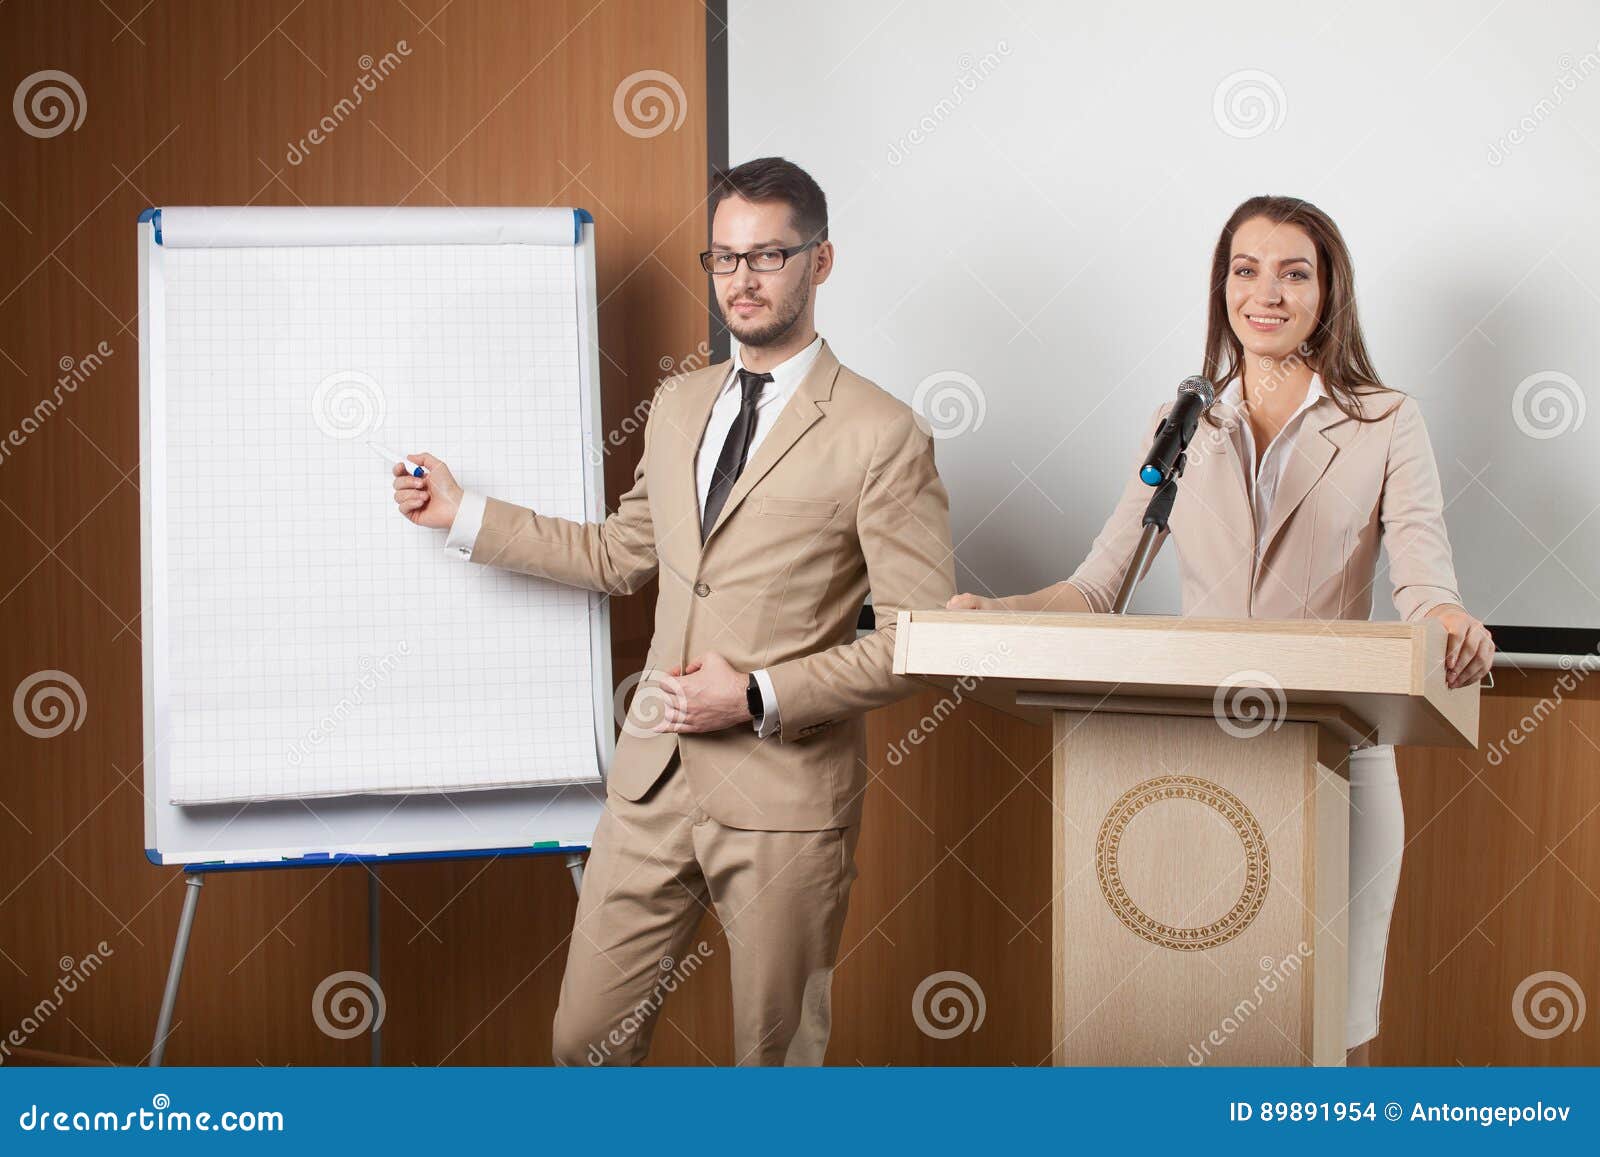 hold a presentation on